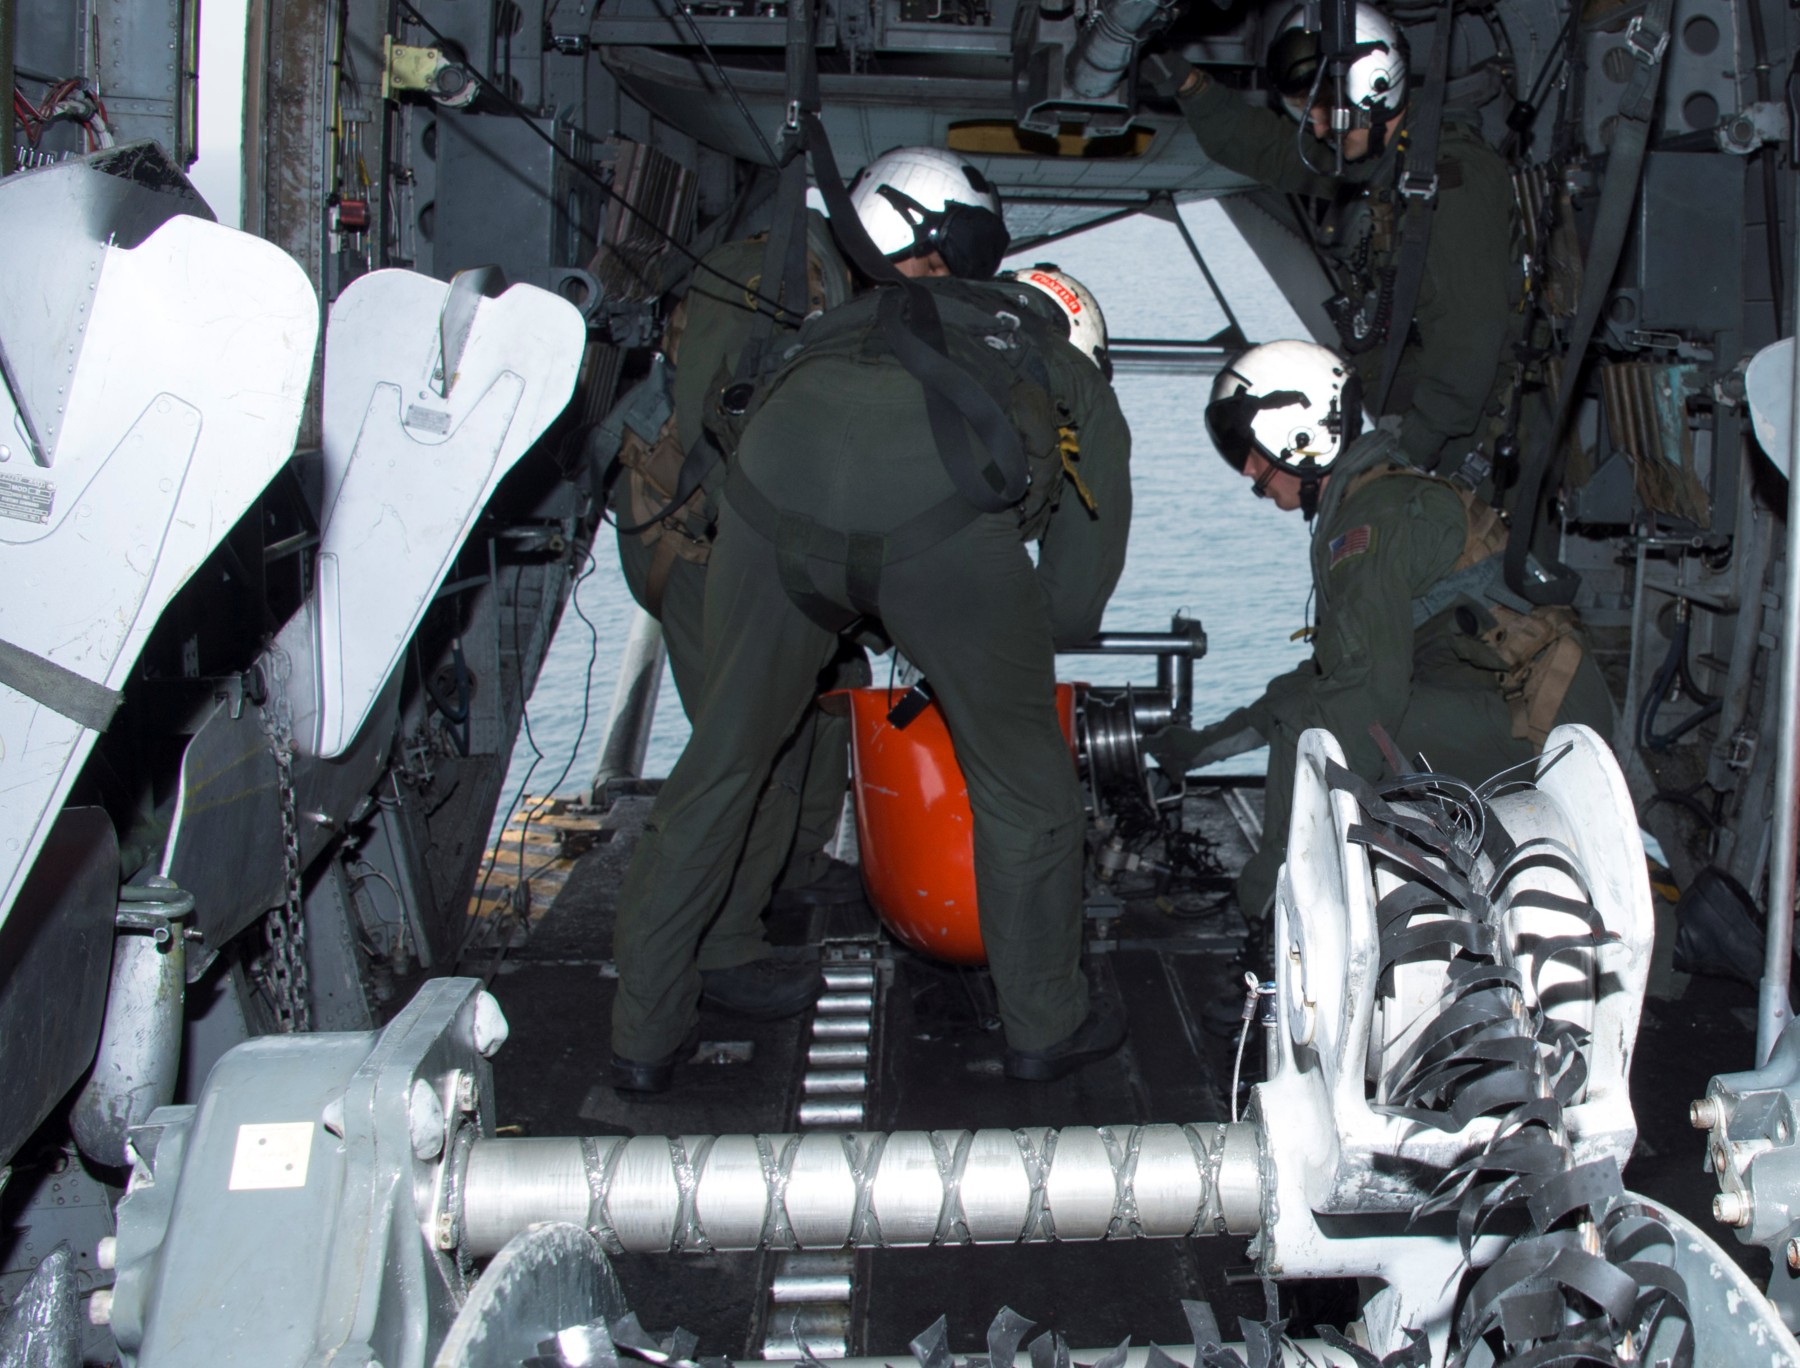 hm-15 blackhawks helicopter mine countermeasures squadron navy mh-53e sea dragon 126